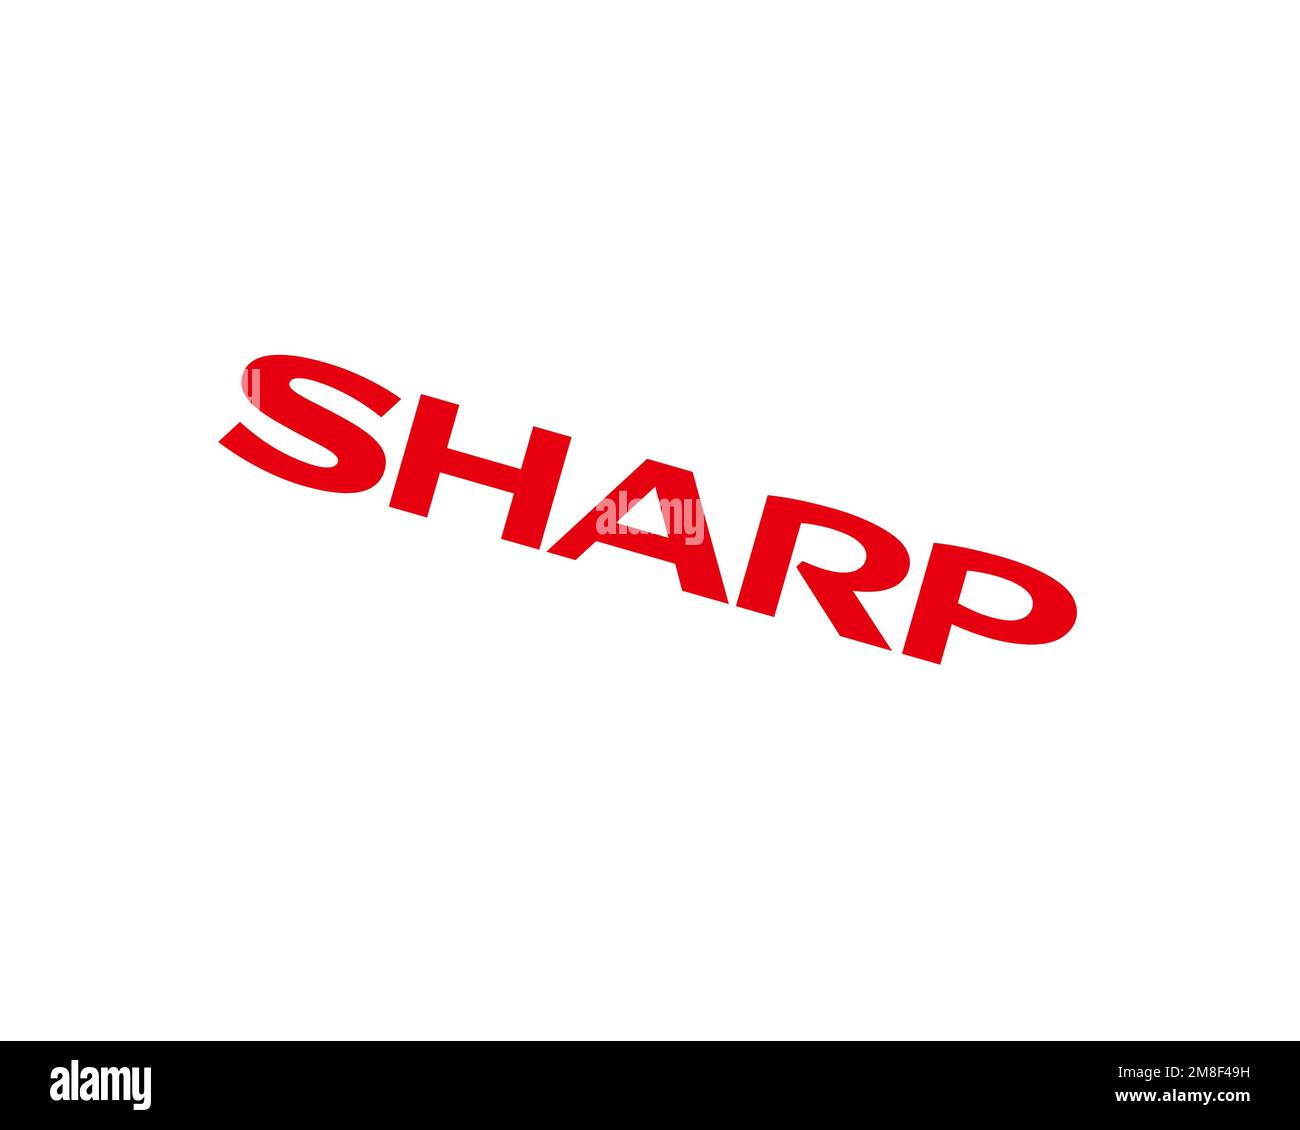 Sharp Corporation, rotated logo, white background B Stock Photo